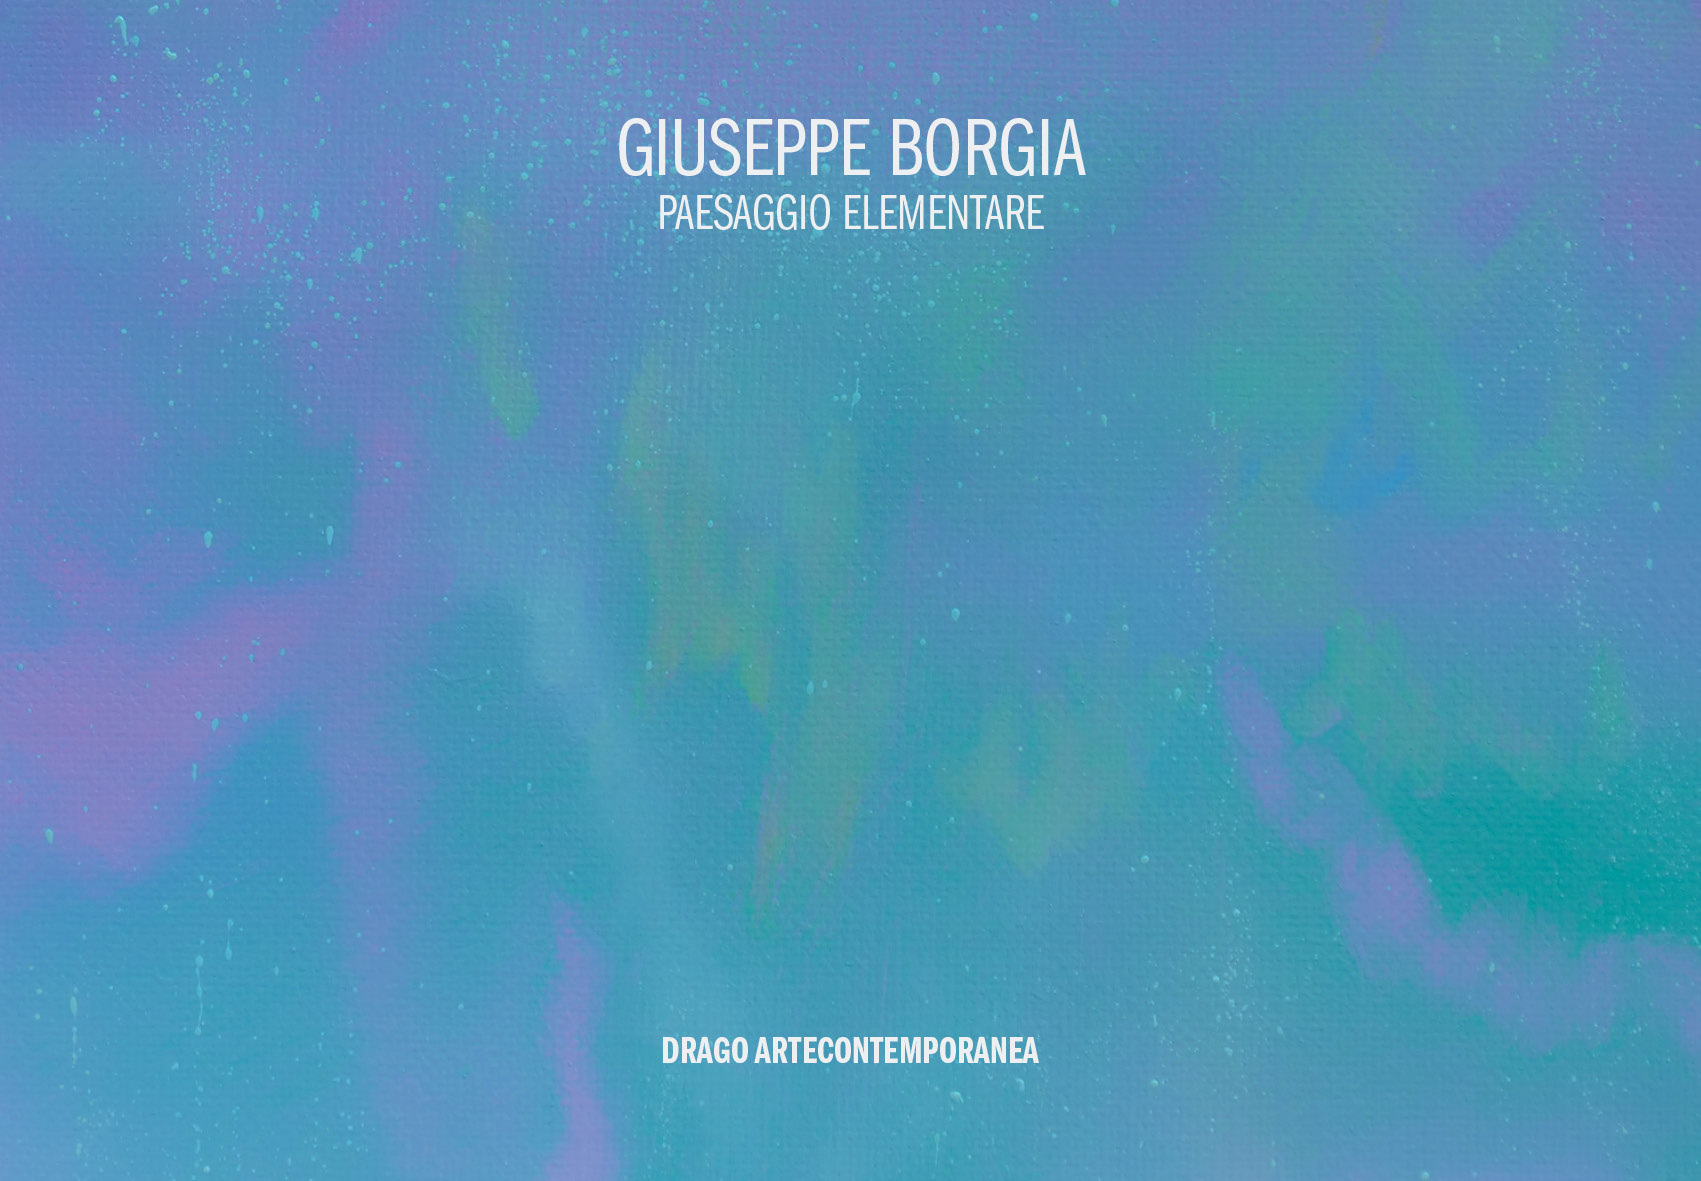 Giuseppe Borgia,  "Paesaggio elementare"